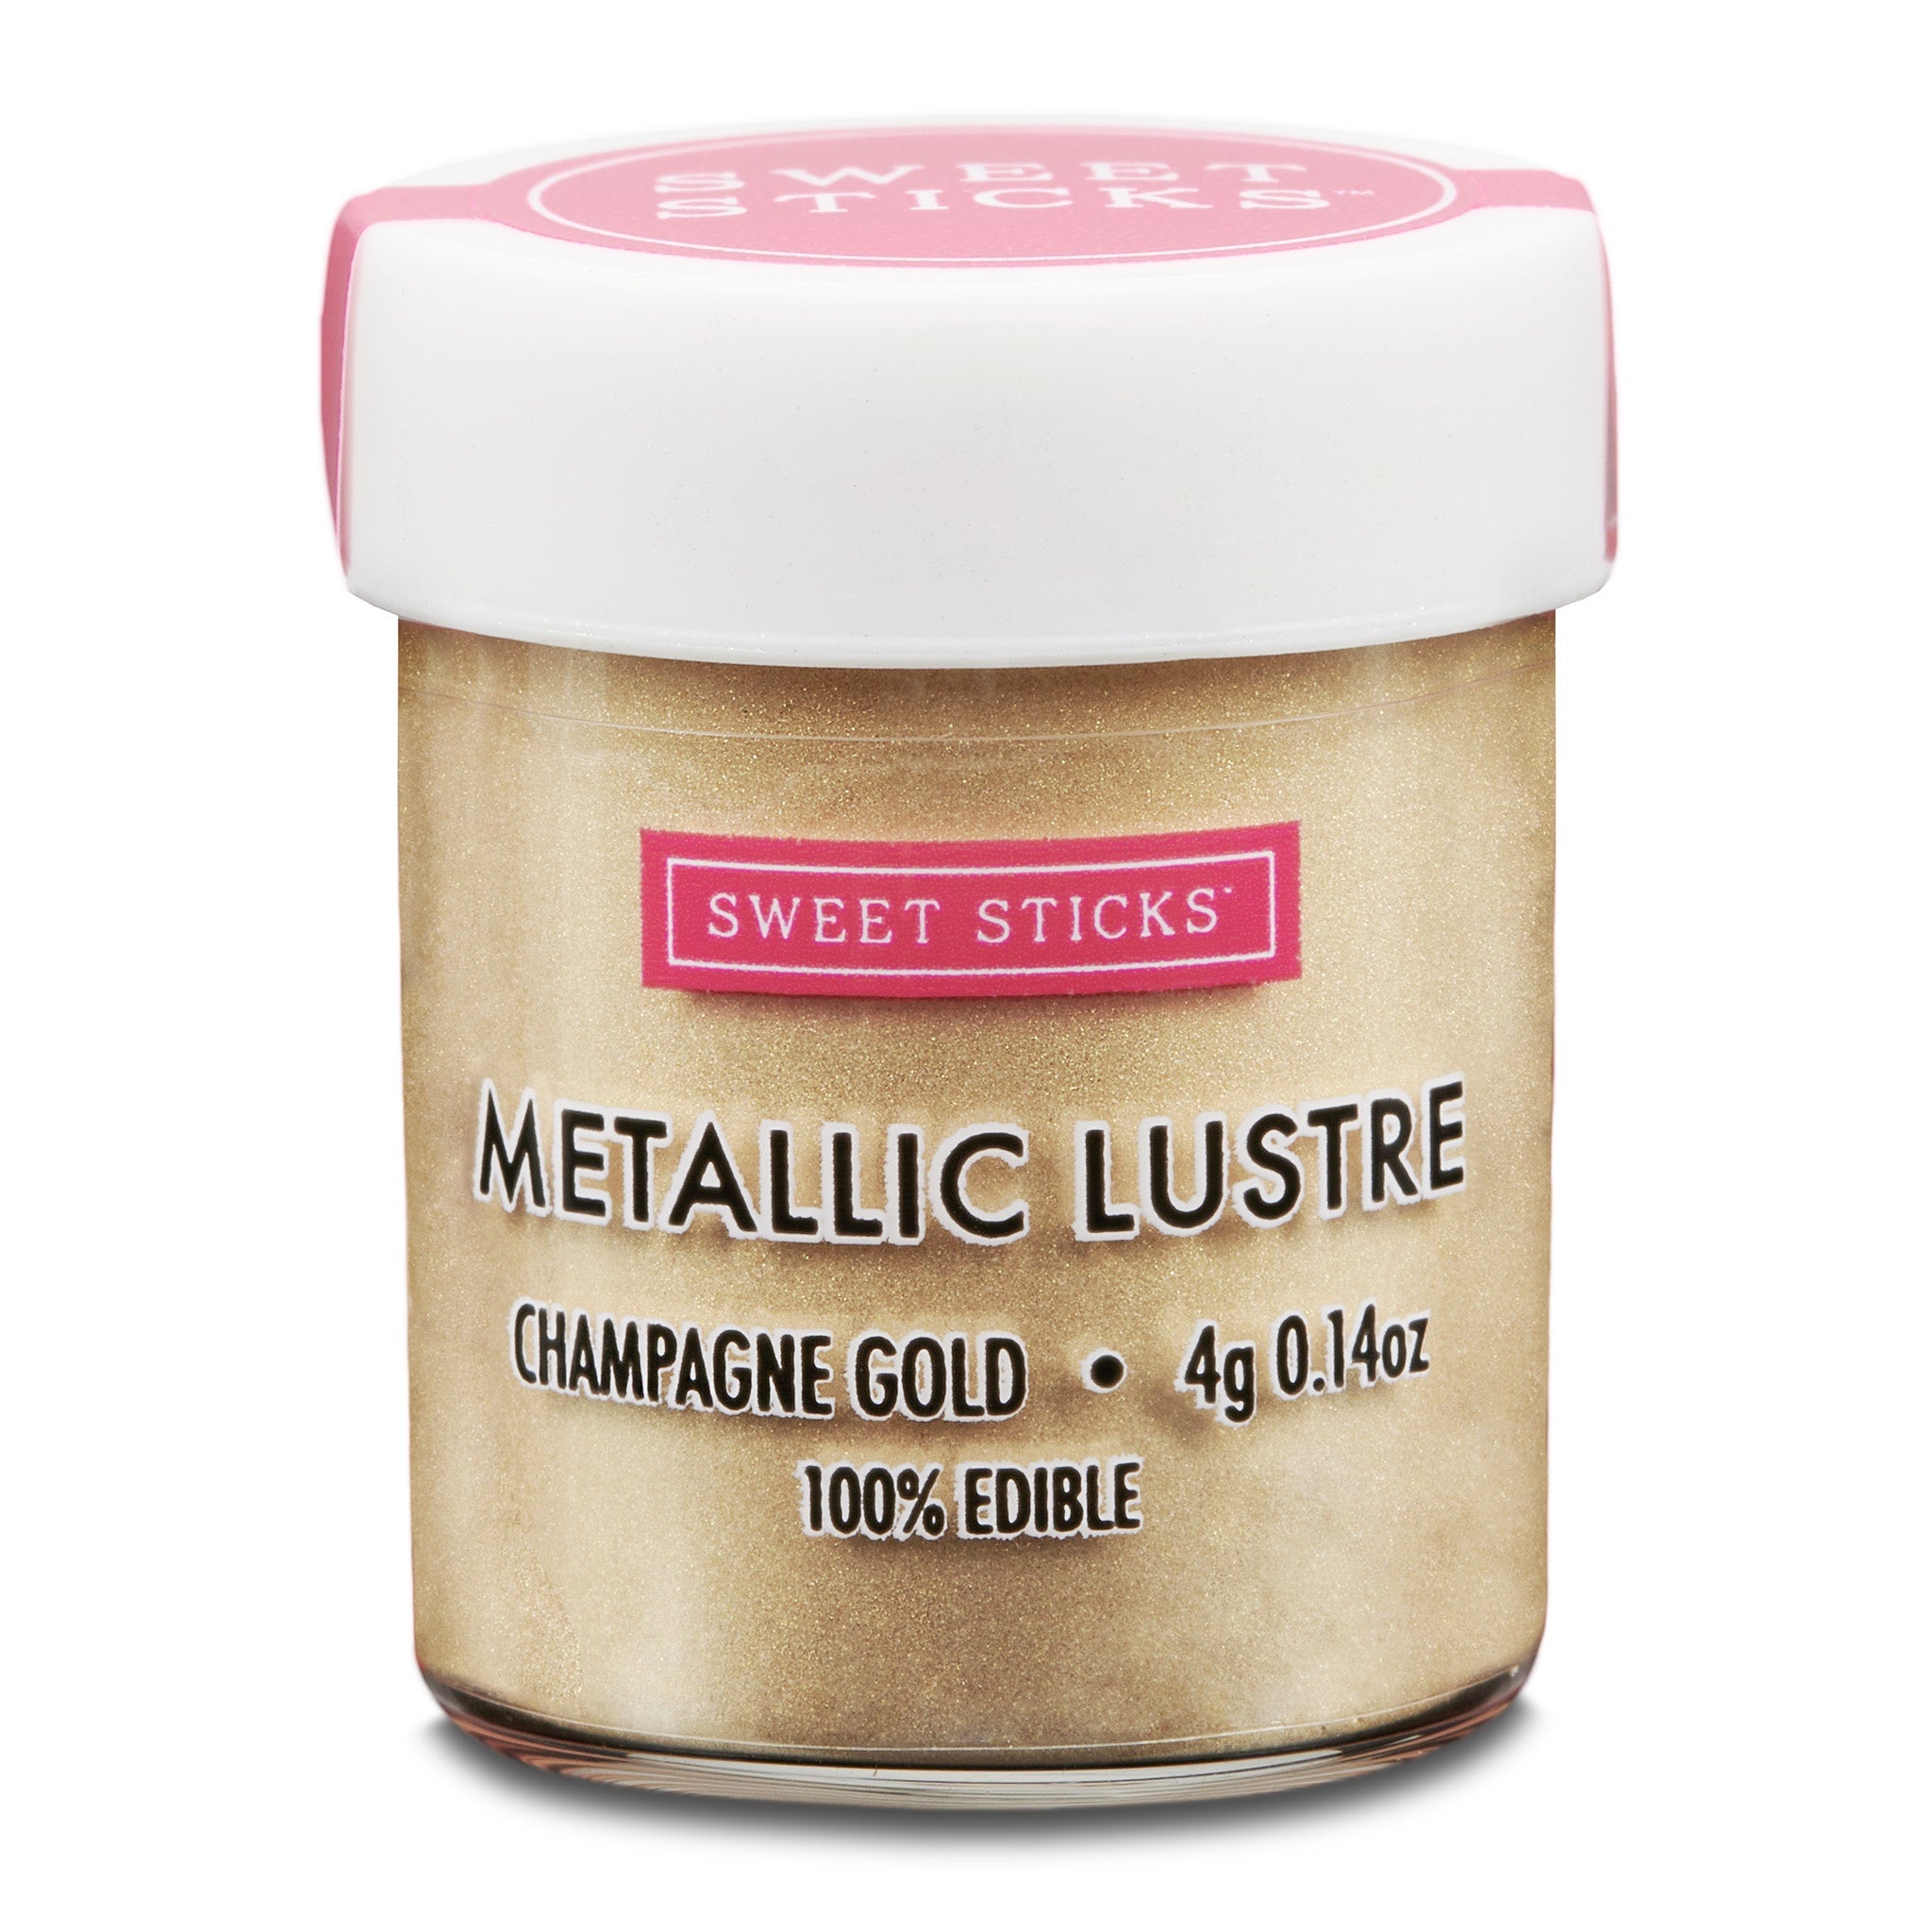 Sweet Sticks Metallic Lustre 4g - Champagne Gold